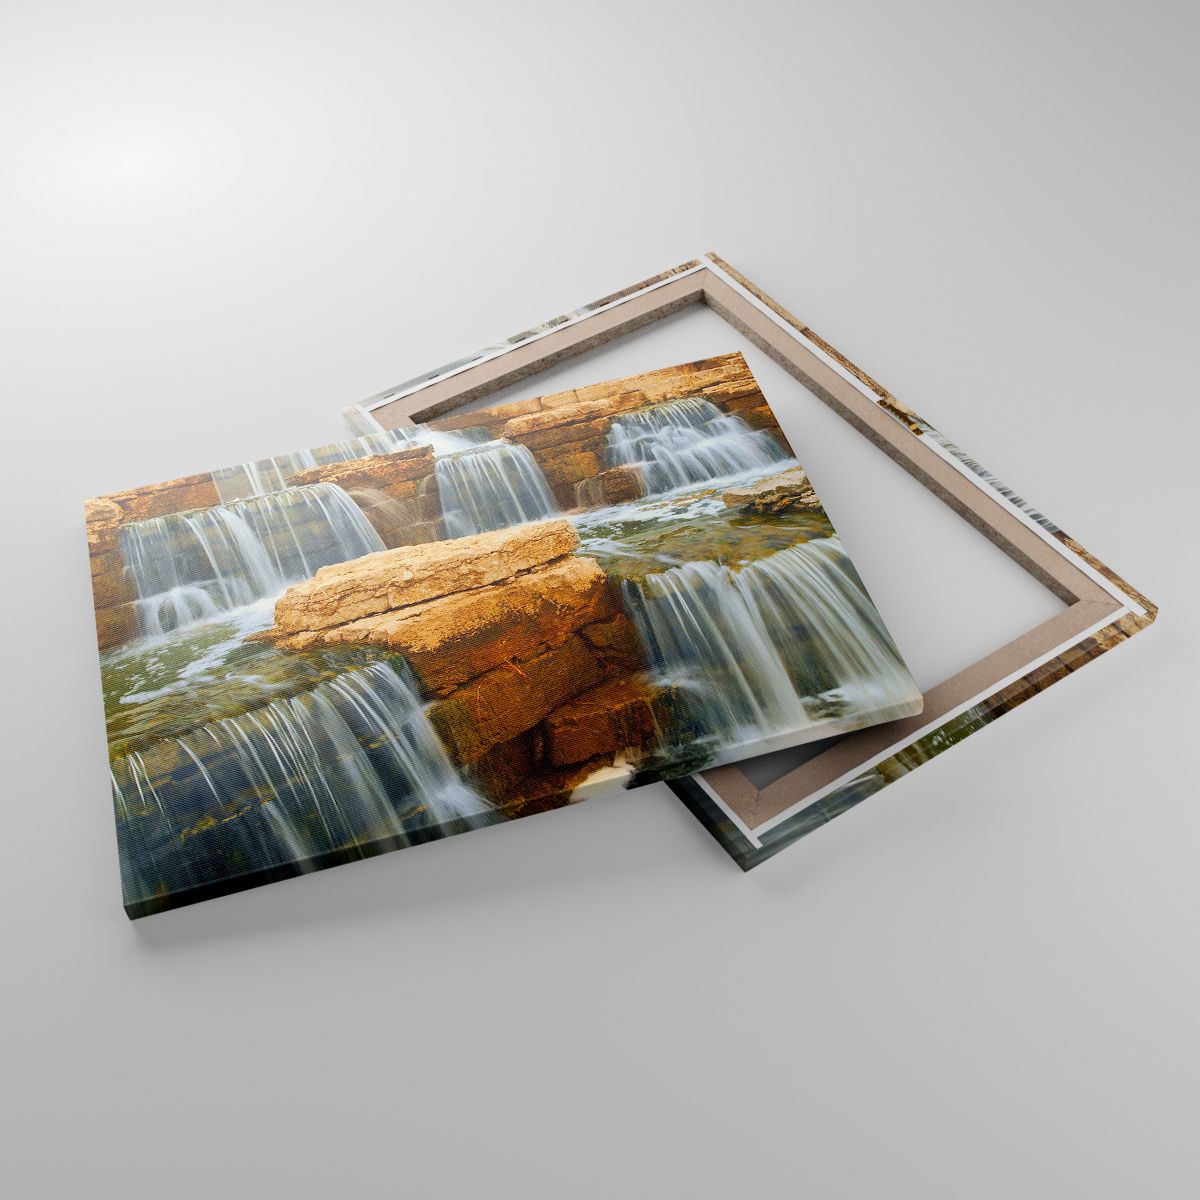 Leinwandbild Wasserfall, Leinwandbild Natur, Leinwandbild Landschaft, Leinwandbild Wasser, Leinwandbild Strom